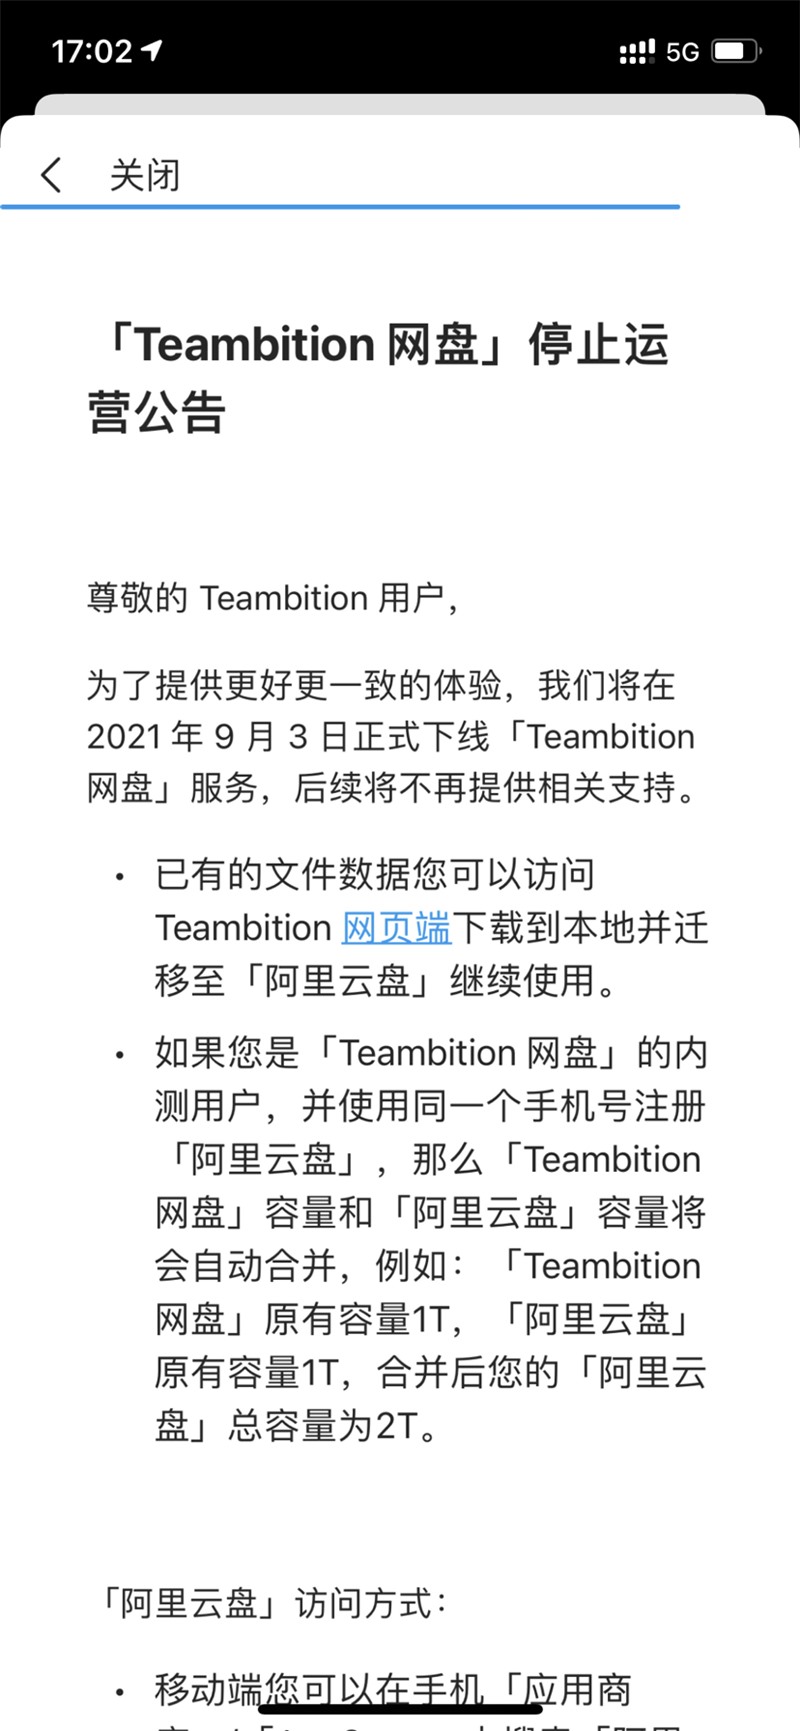 Teambition 网盘将于 9 月 3 日下线，可转向阿里云盘且容量叠加